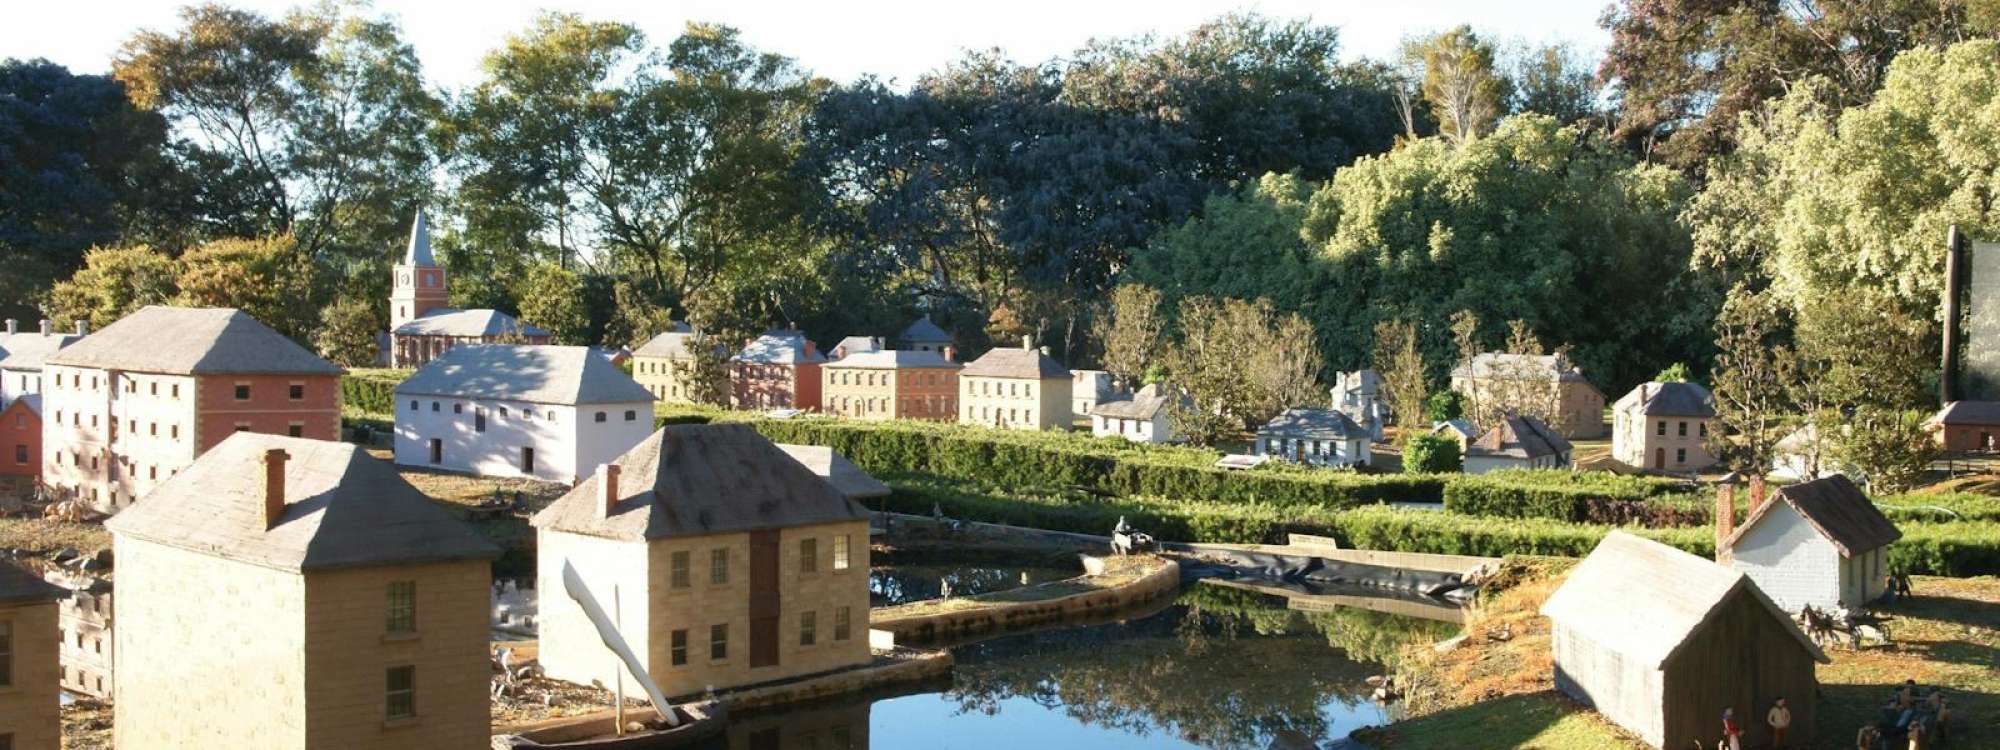 Old Hobart Town Model